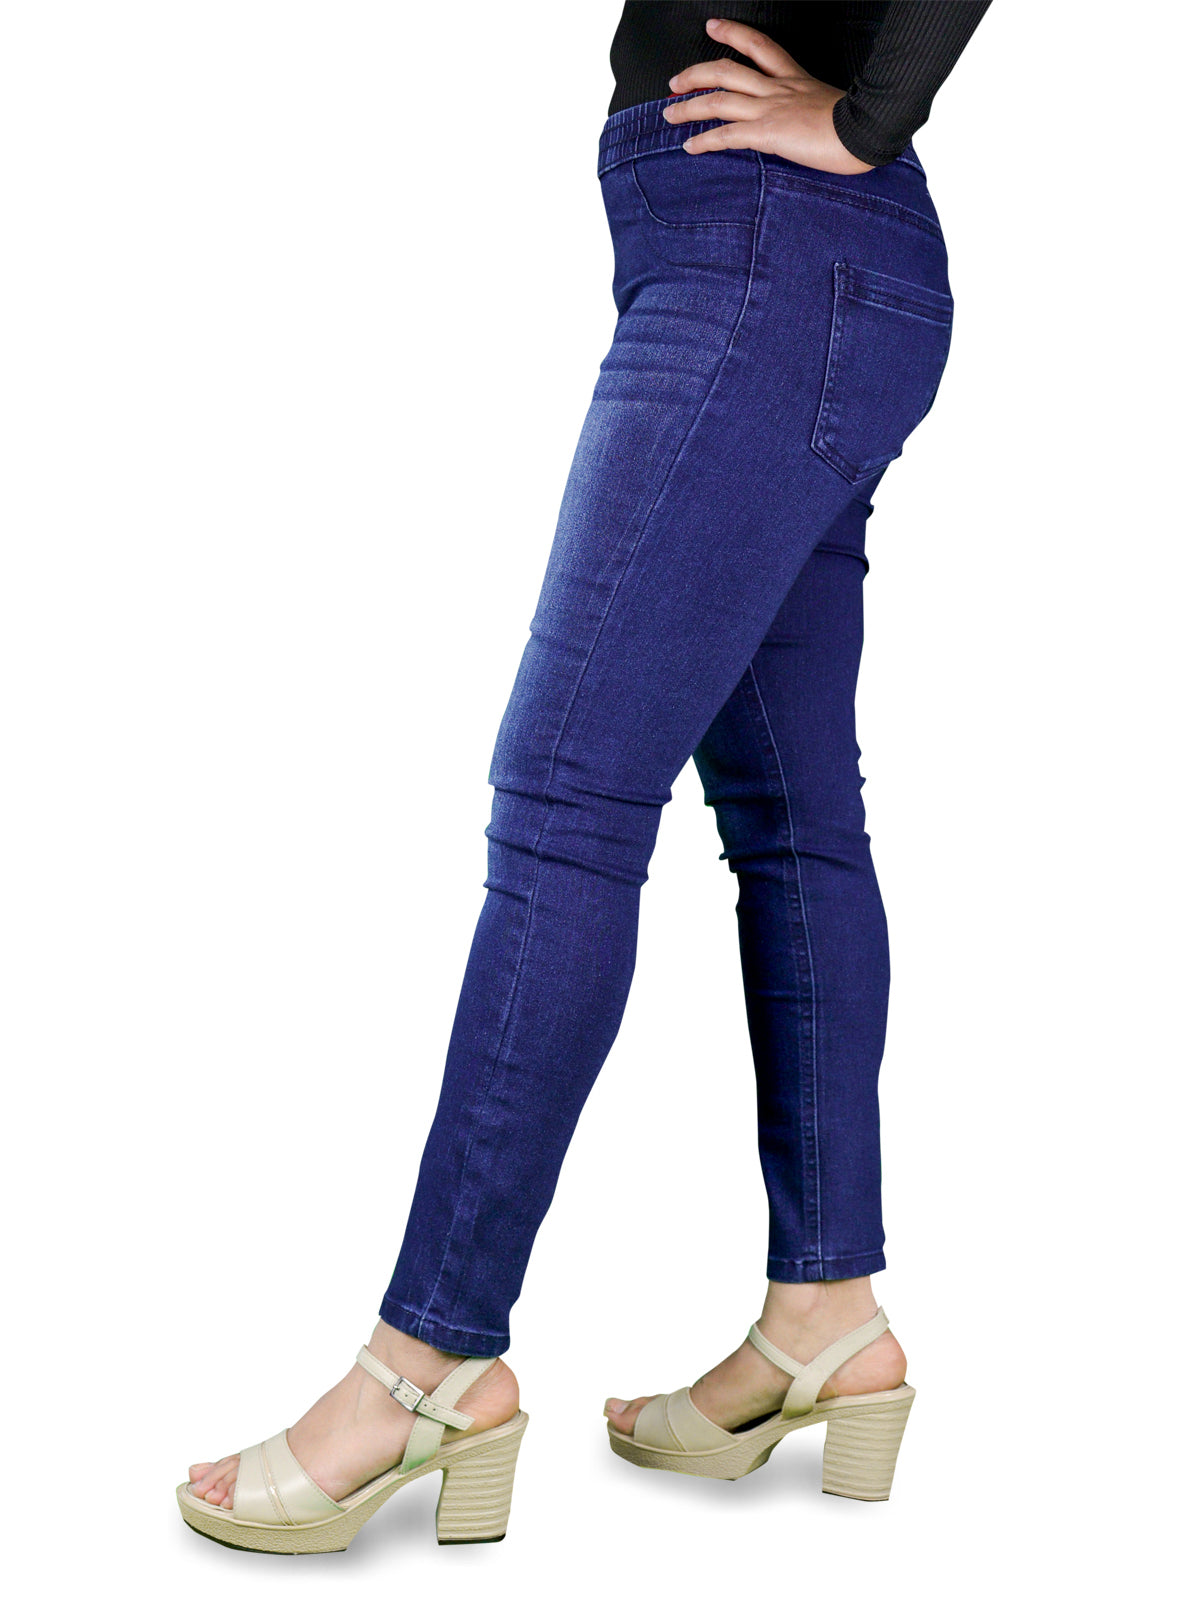 Women's Skinny Jean Elastic Waist Pull-On Jegging Denim Pants with